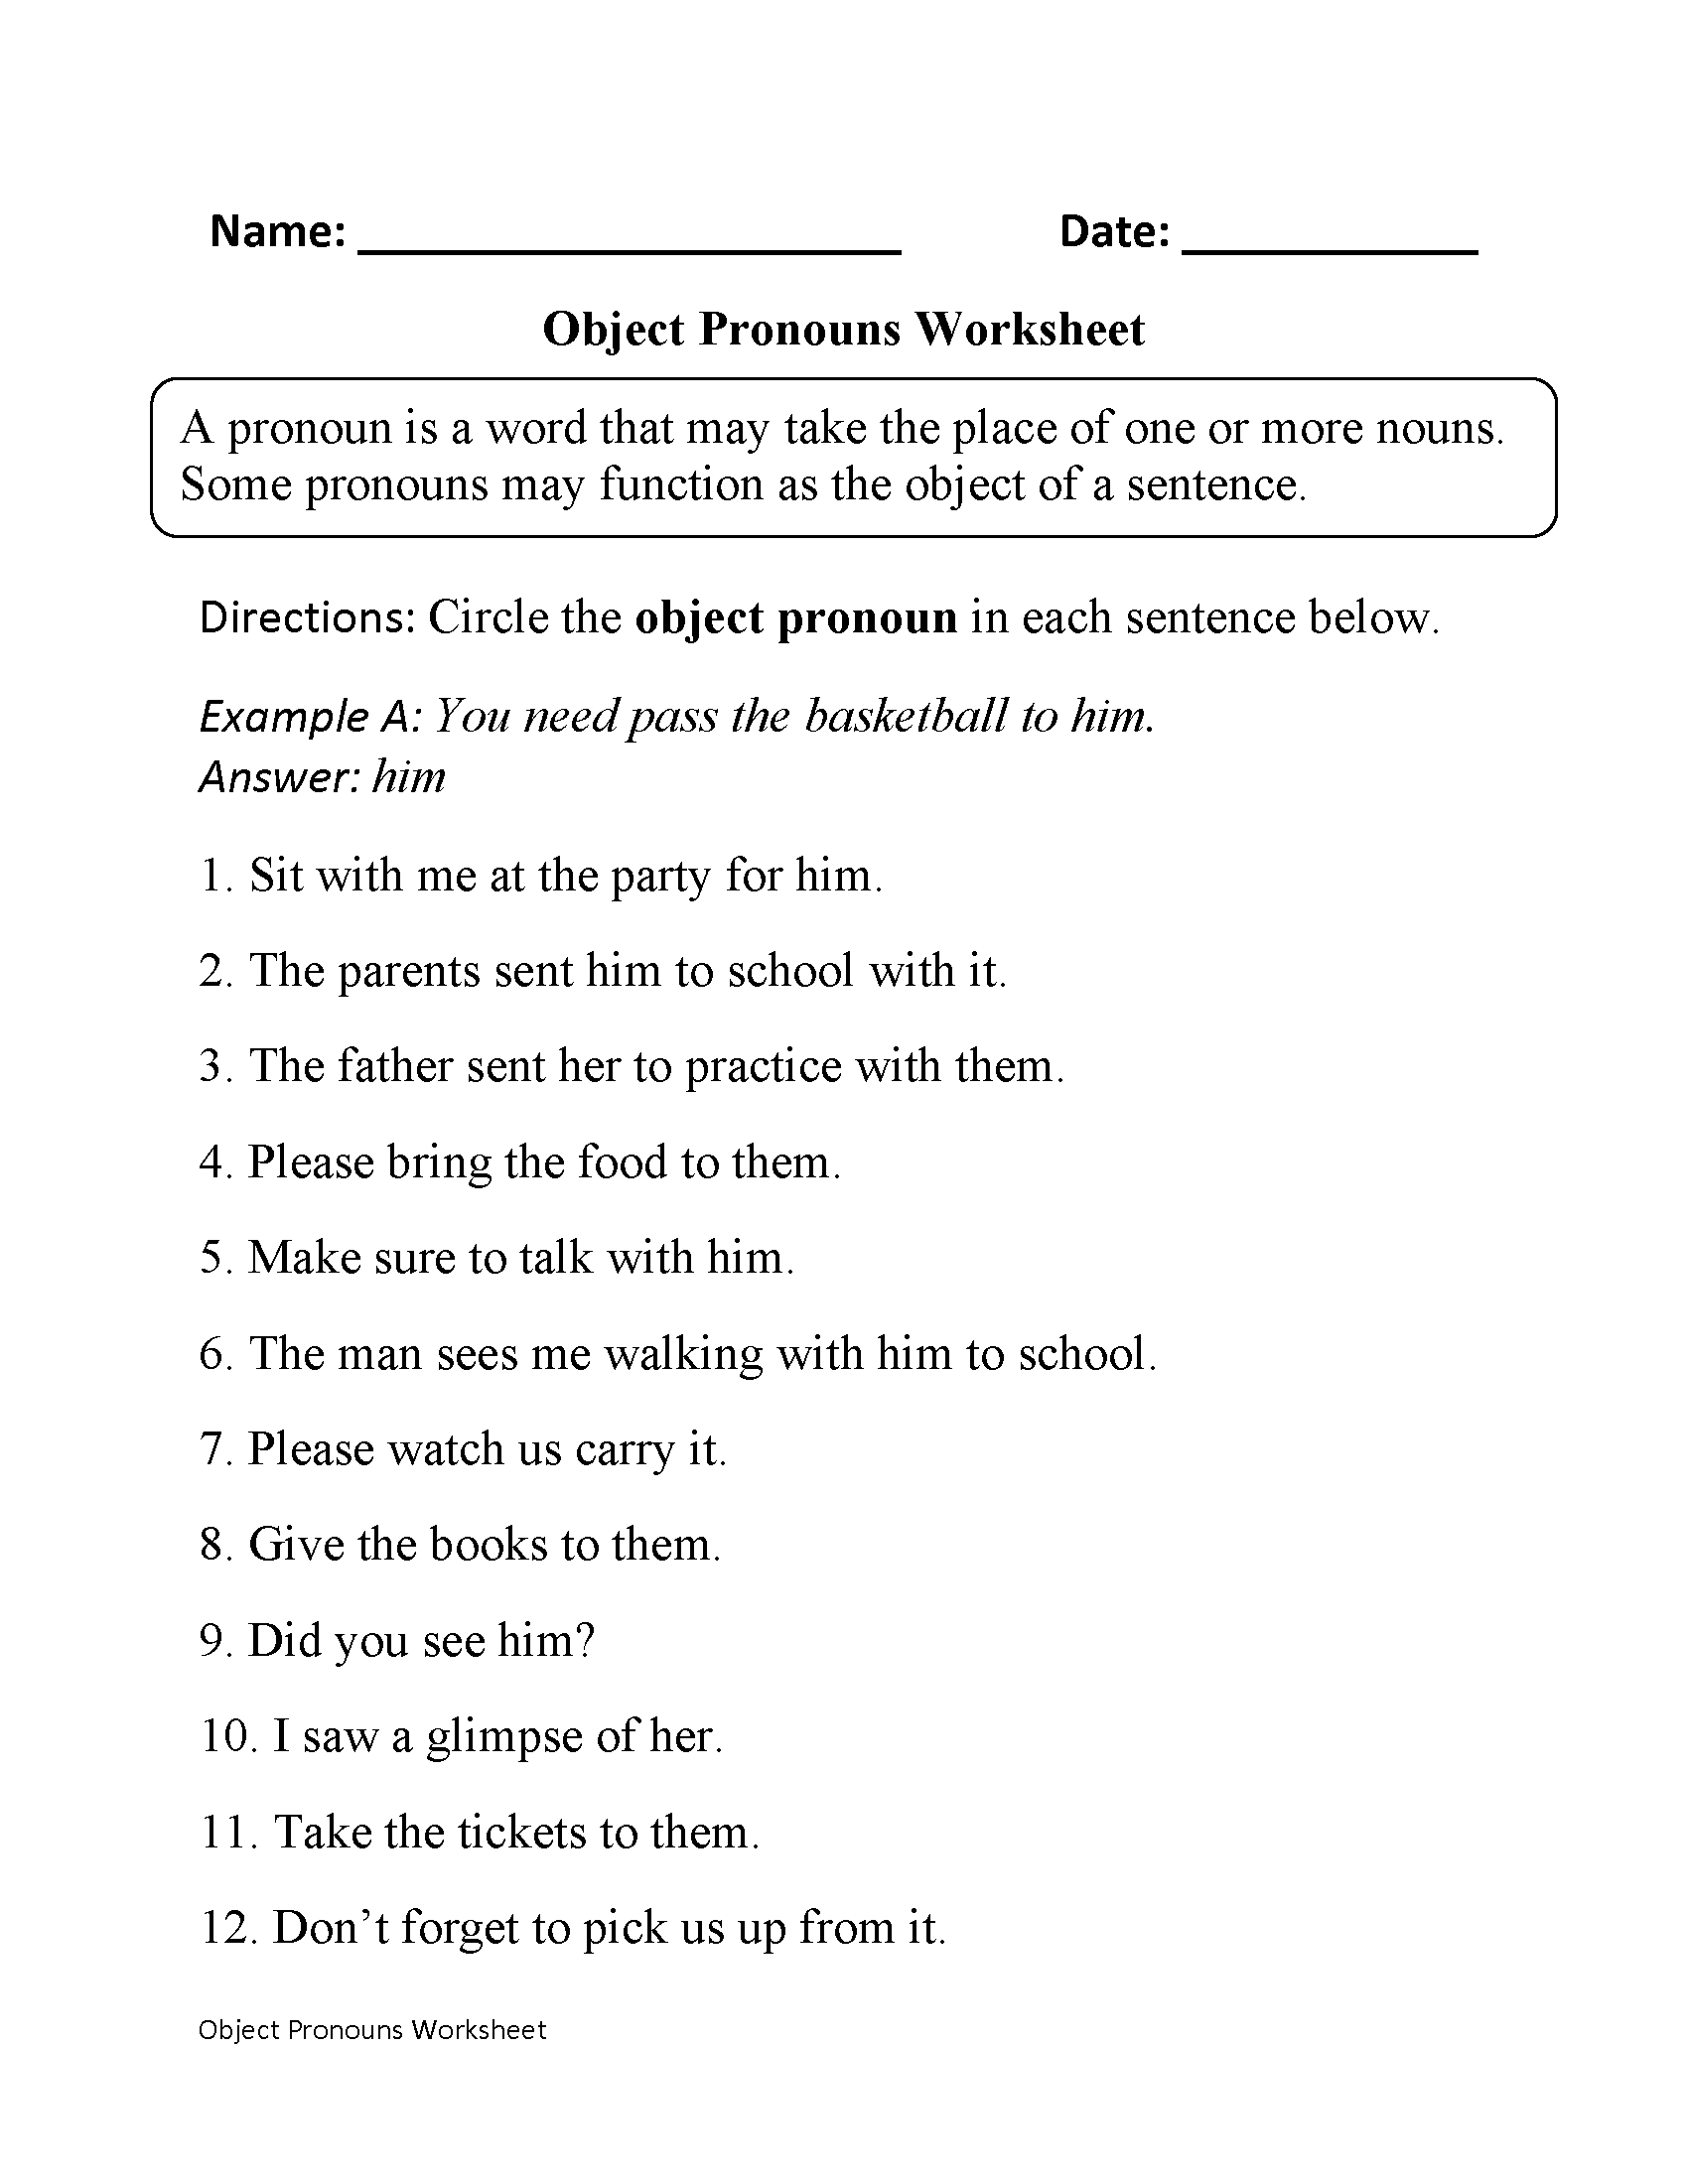 Object Pronouns Worksheet